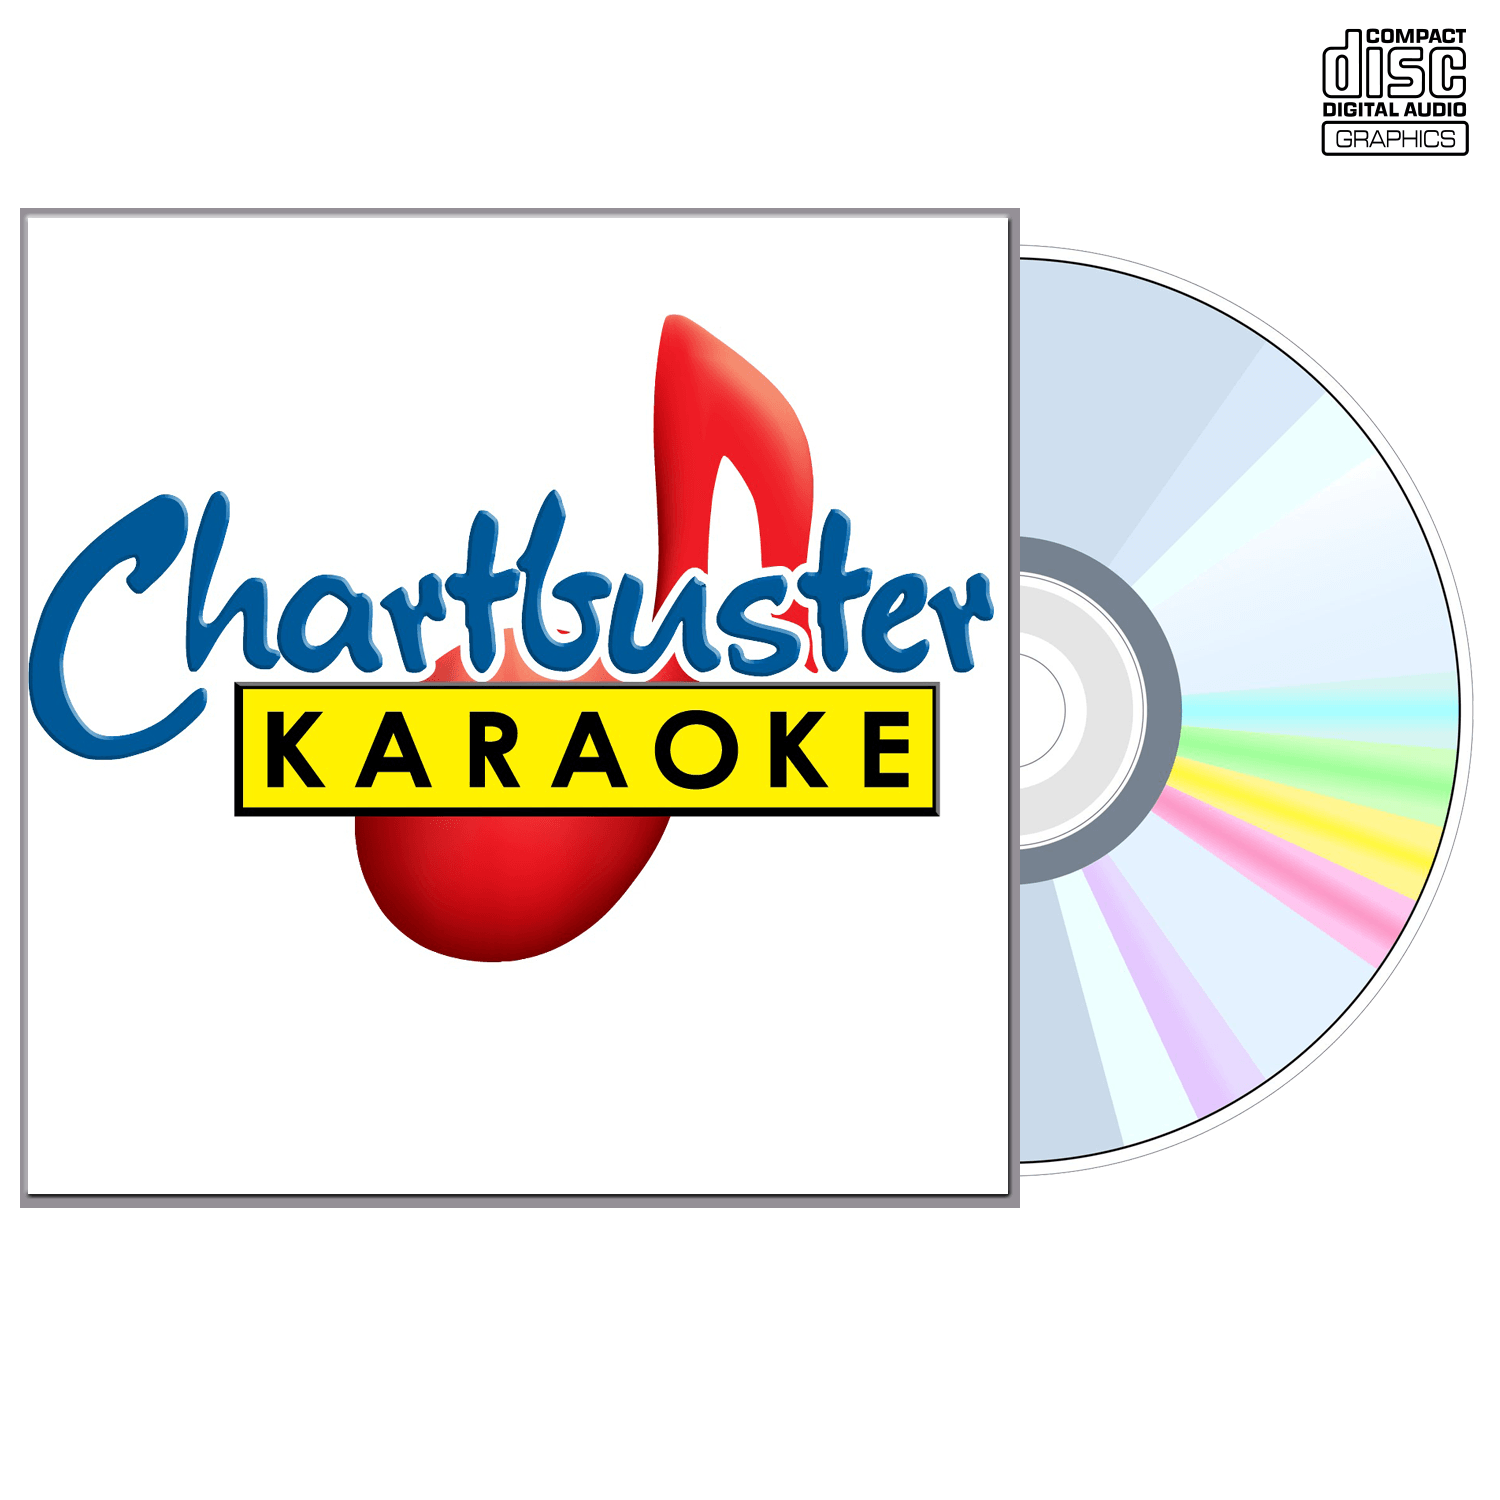 70's Collection Vol 19 - CD+G - Chartbuster Karaoke - Karaoke Home Entertainment